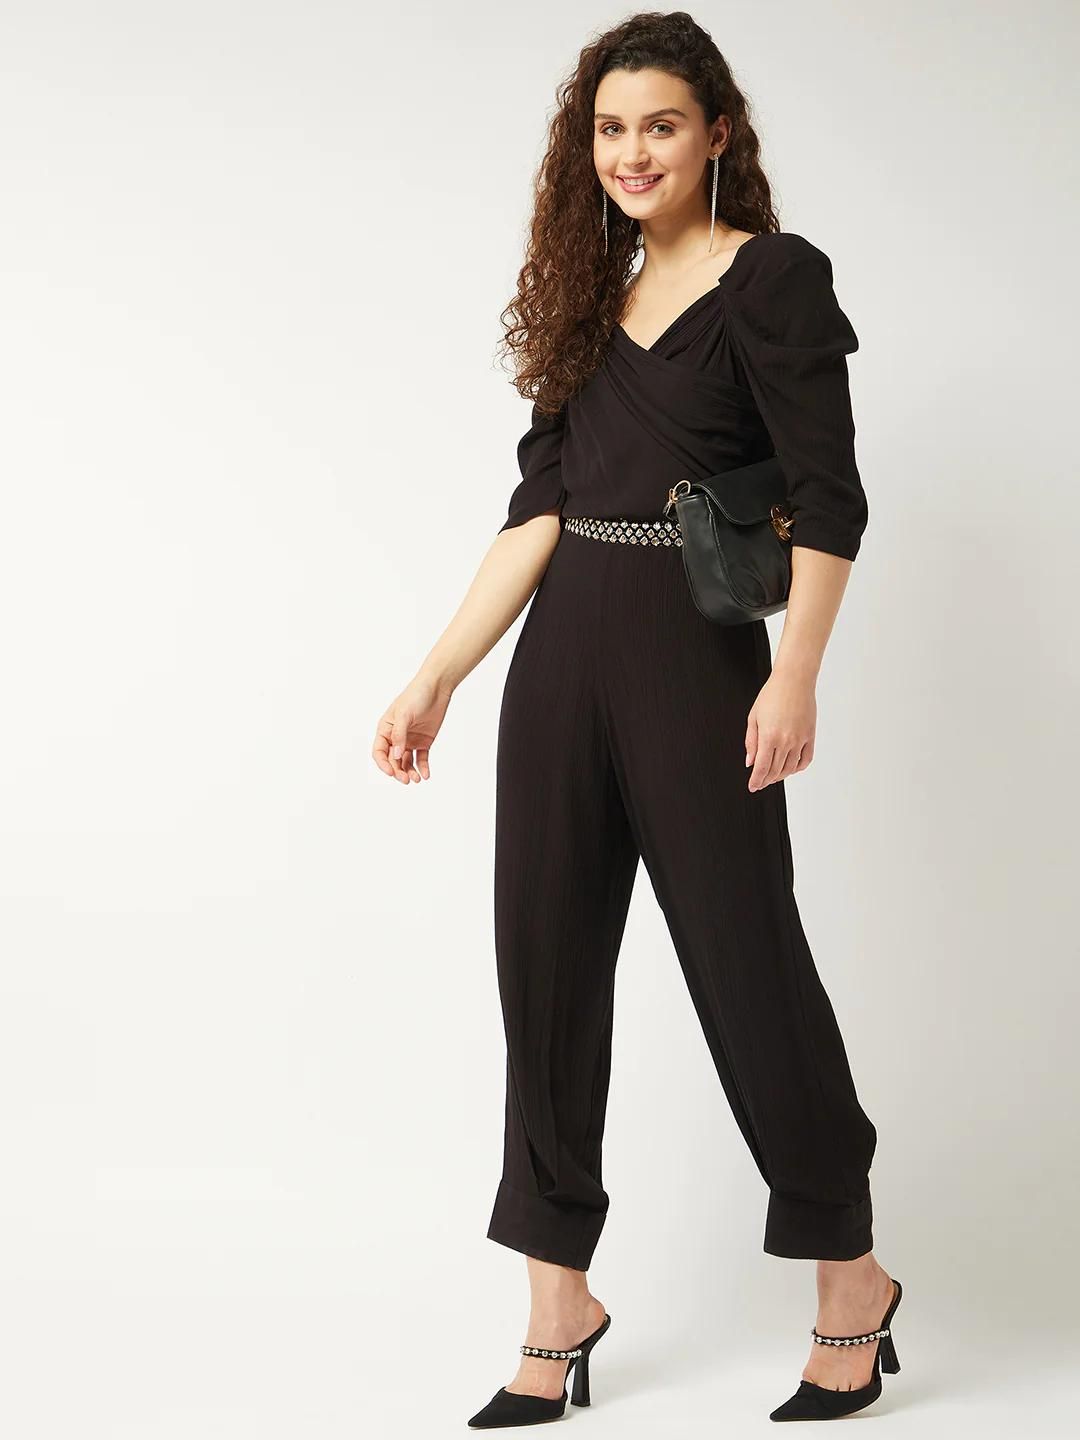 PANNKH Black Solid Ruffle Sleeves Stylish Jumpsuit